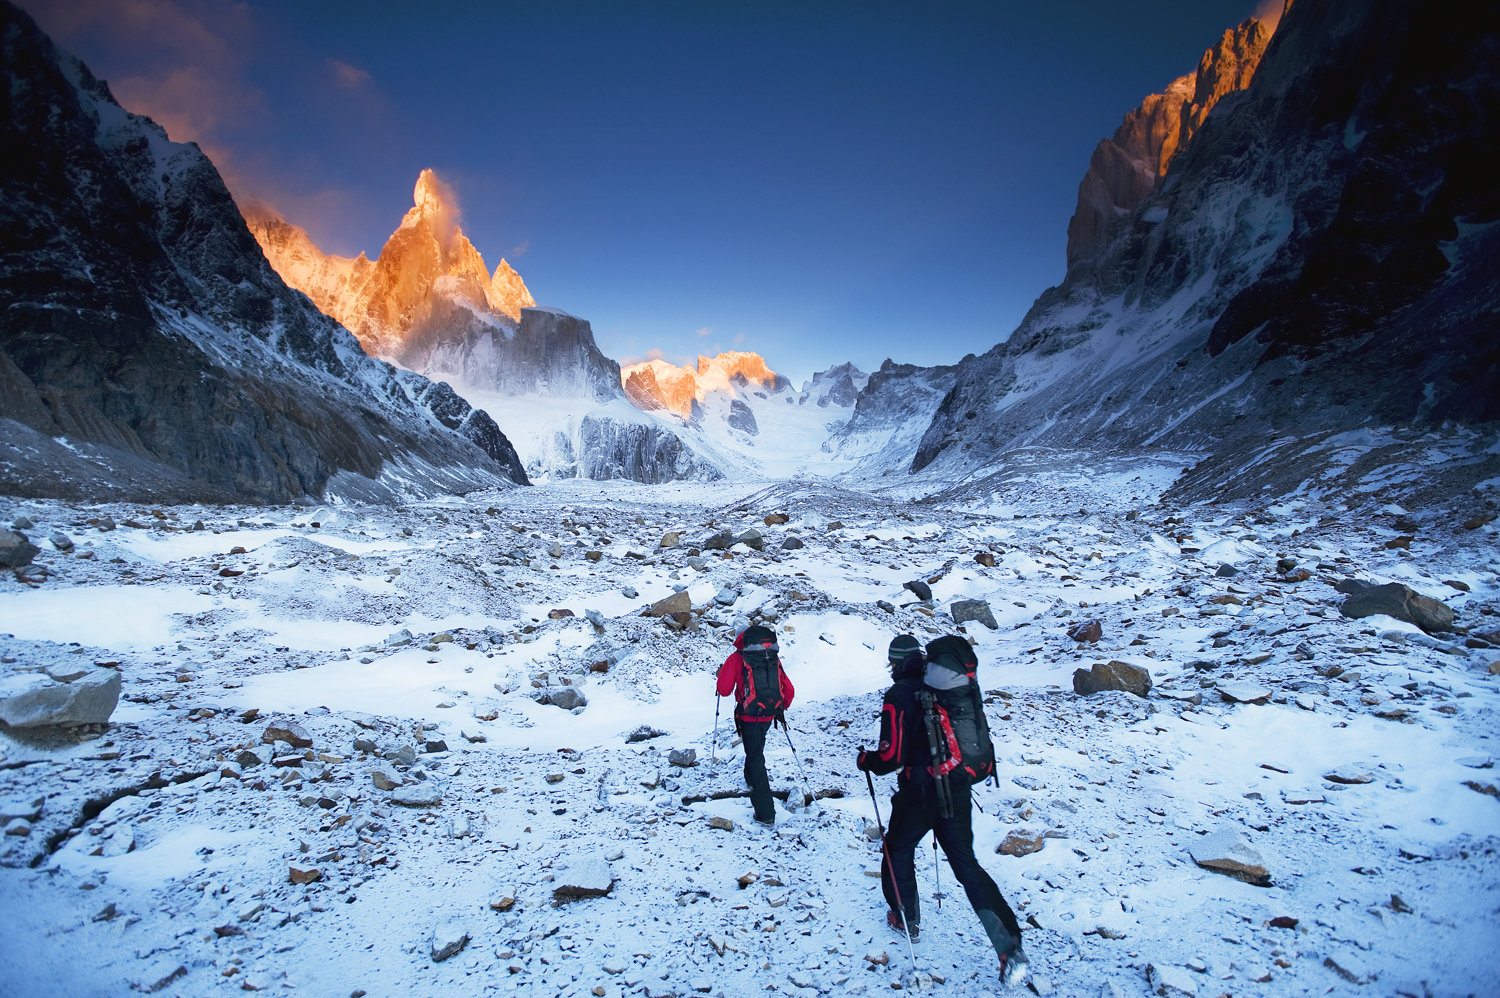 For perfect mountain shots, photographer Corey Rich climbs it | Digital ...